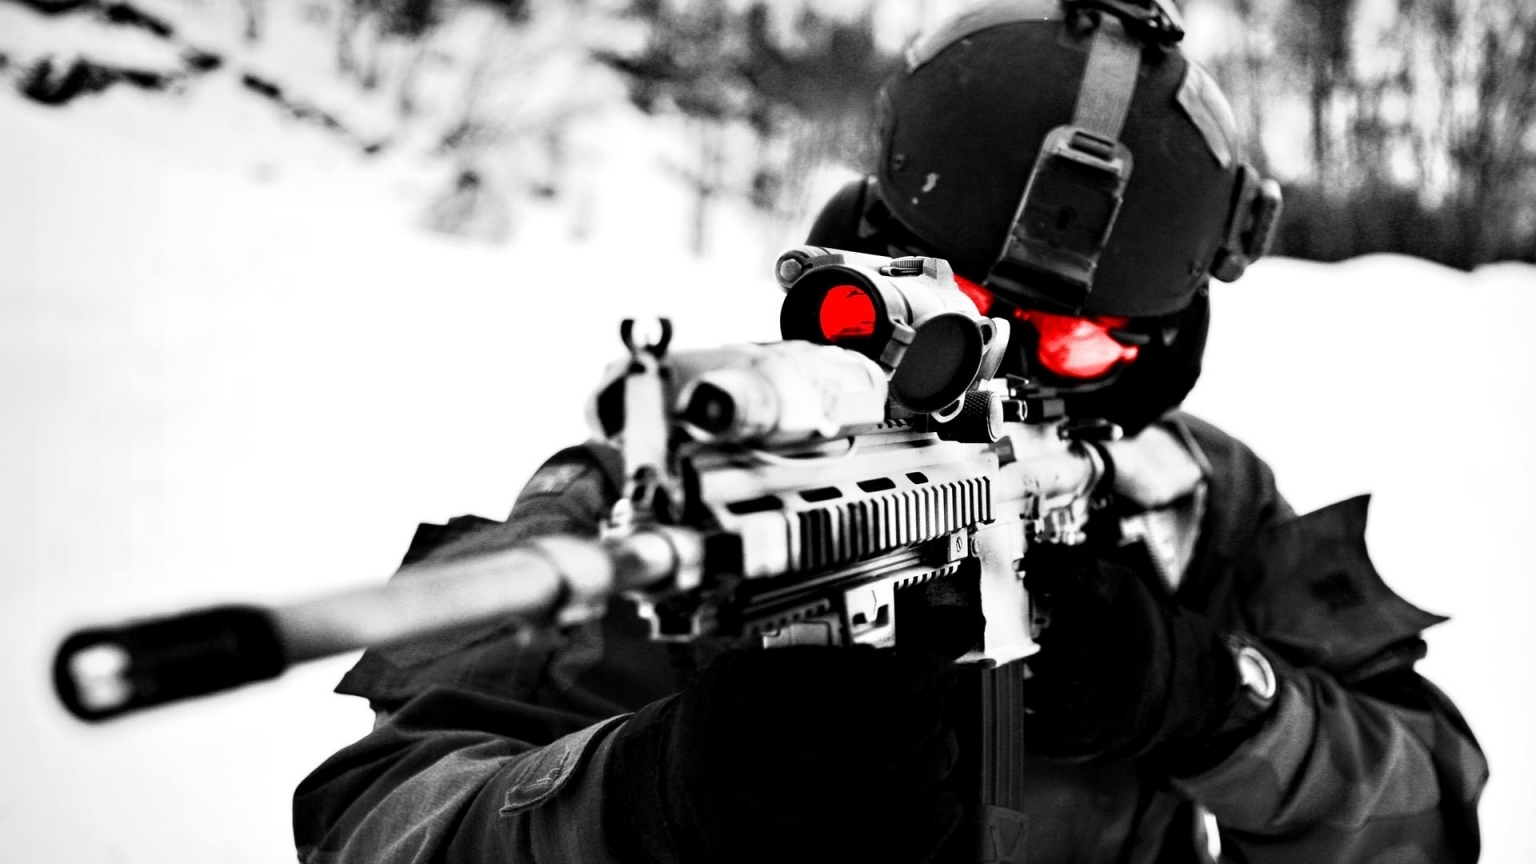 Winter Sniper for 1536 x 864 HDTV resolution